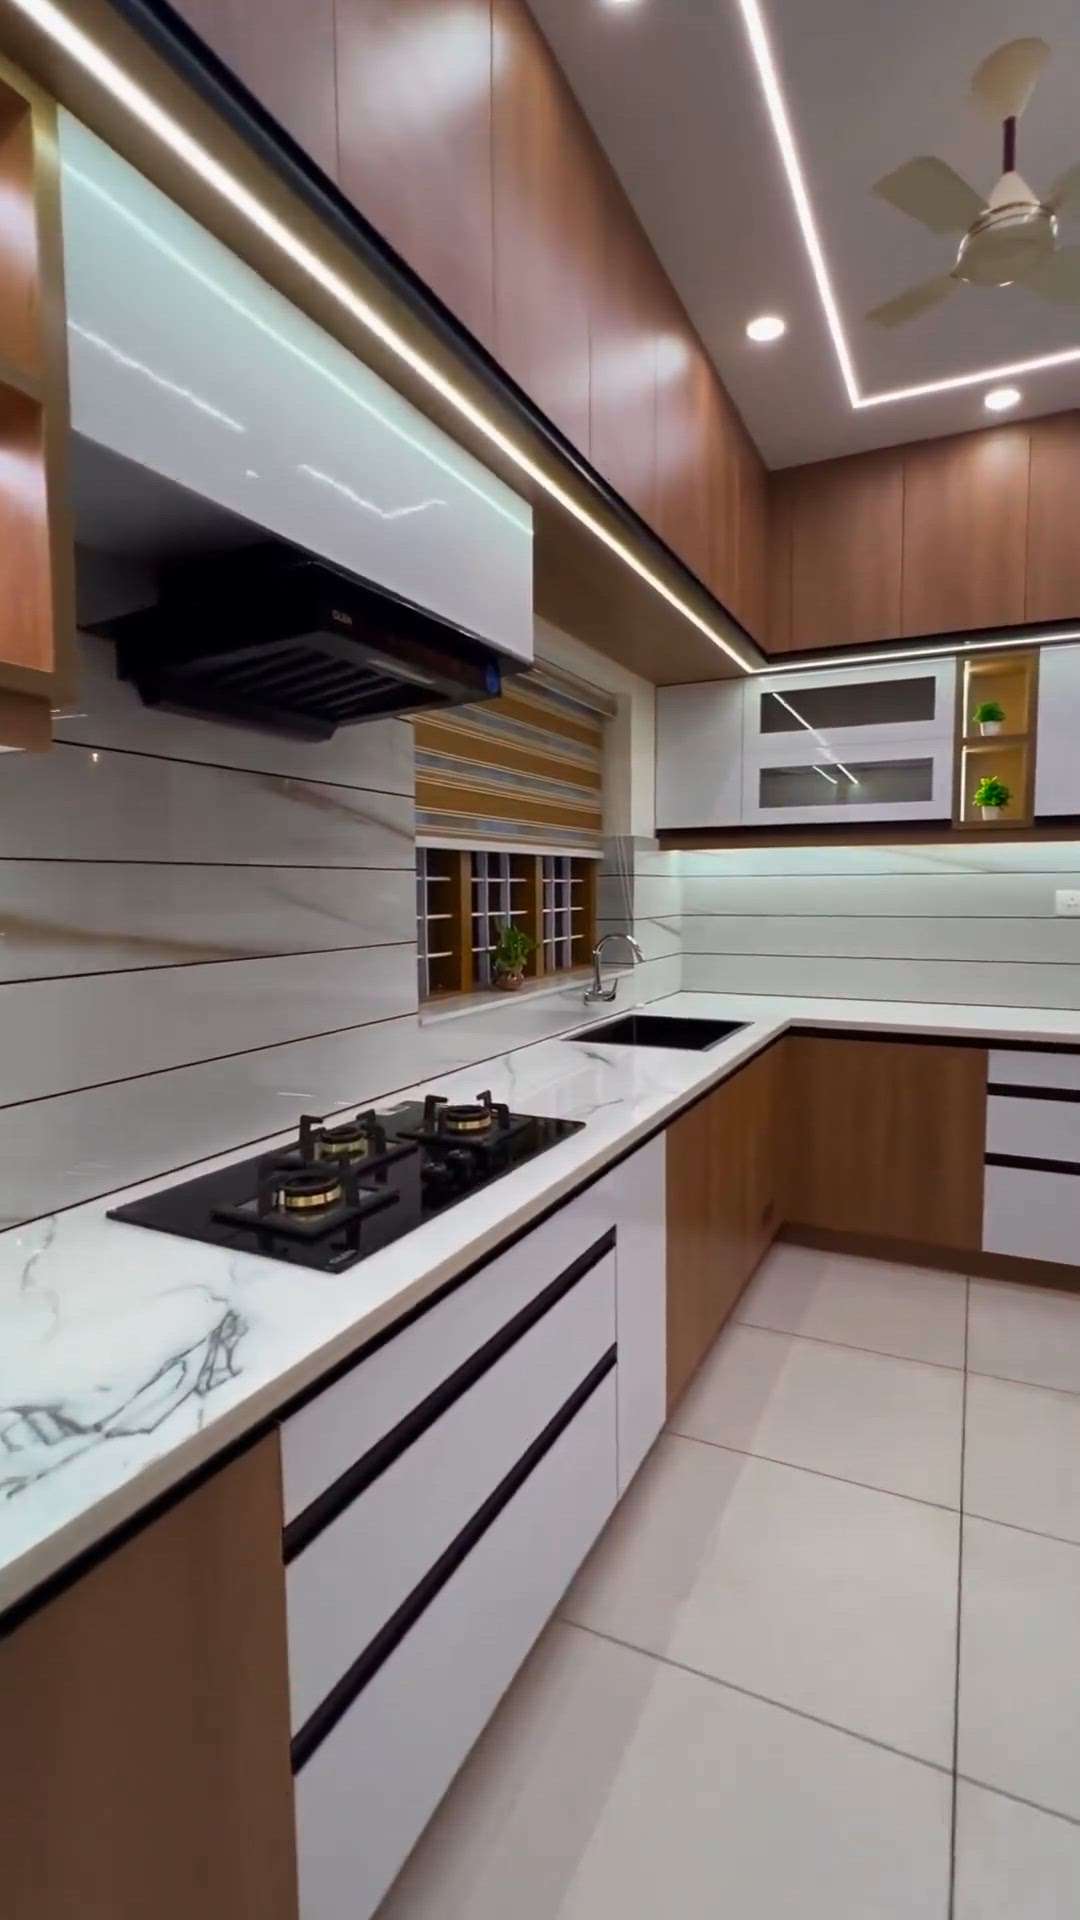 Kitchen  outlet in Modern Concept...
More info ☎️ 9785593022,7891166876
.
.
#interior #interiordesigner #interiors #decor #homedesign #homedecor #housedesign #luxuryhomes #interiör #interiør #luxurylifestyle #pune #punekar #kitchen #kitchendesign #architect #home #ashwiiniidongare #interiordecor #interiordesigninspiration #homedecoration #architecture #houzzindia #pinterest#mumbai
#banglore
#interiordesignideas #decorationideas #luxuryhome

[Trending reels, Interior design, Interior, Reels, Pune, Dubai, Ashwiinii Dongare, Instagram Growth, Instagram Update, Trending Content, content creation, viral reels]